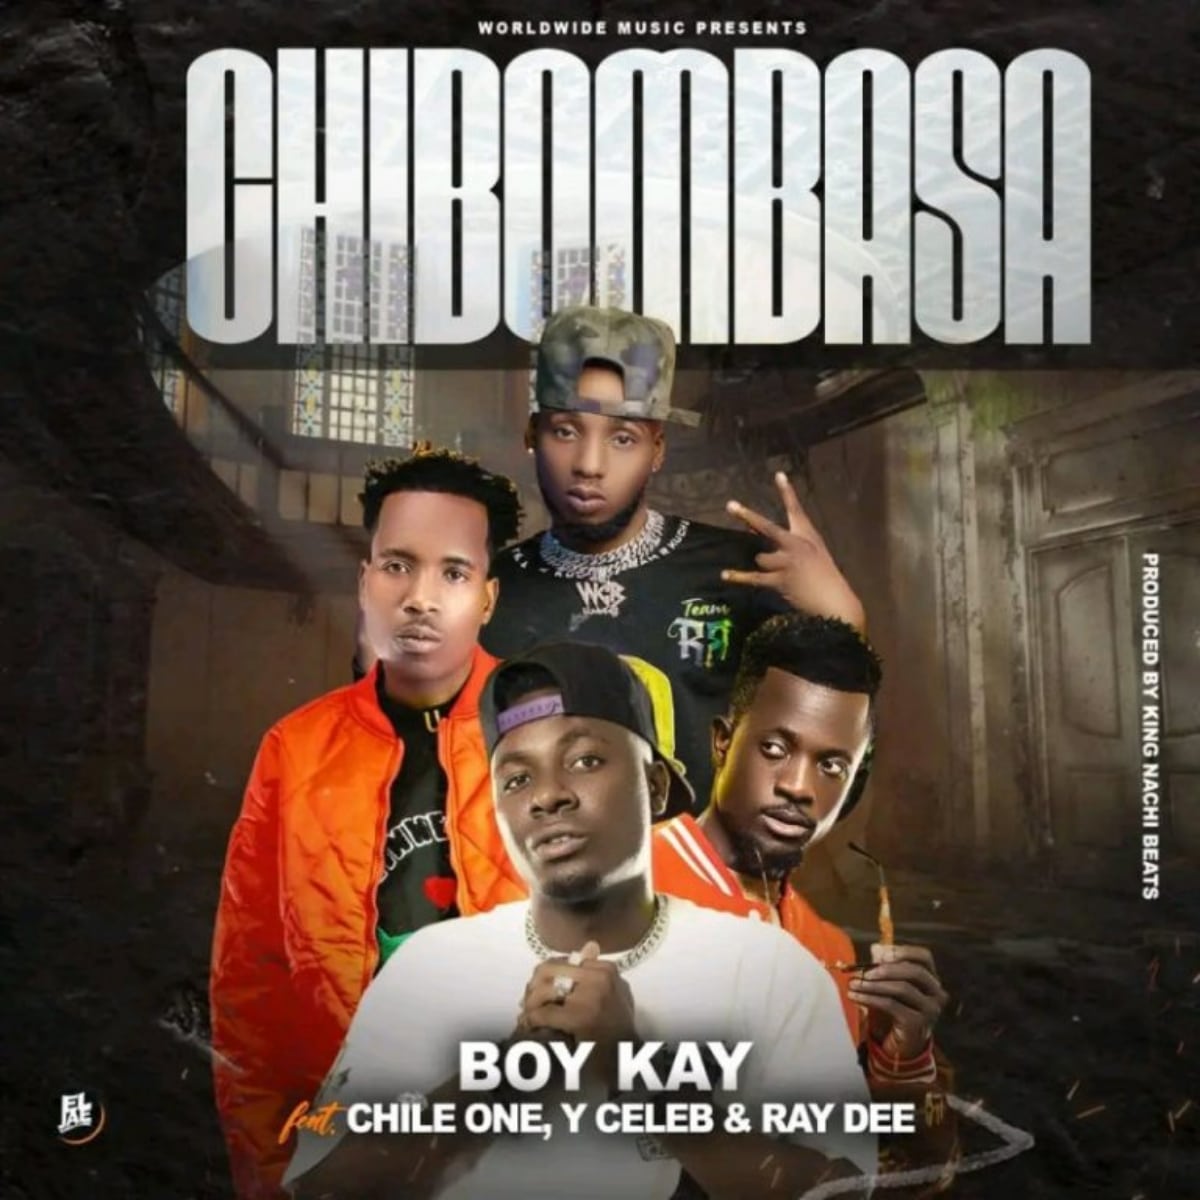 DOWNLOAD: Boy Kay Ft. Chile One Mr Zambia, Ray Dee & Y Celeb – “Chibombasa” Mp3